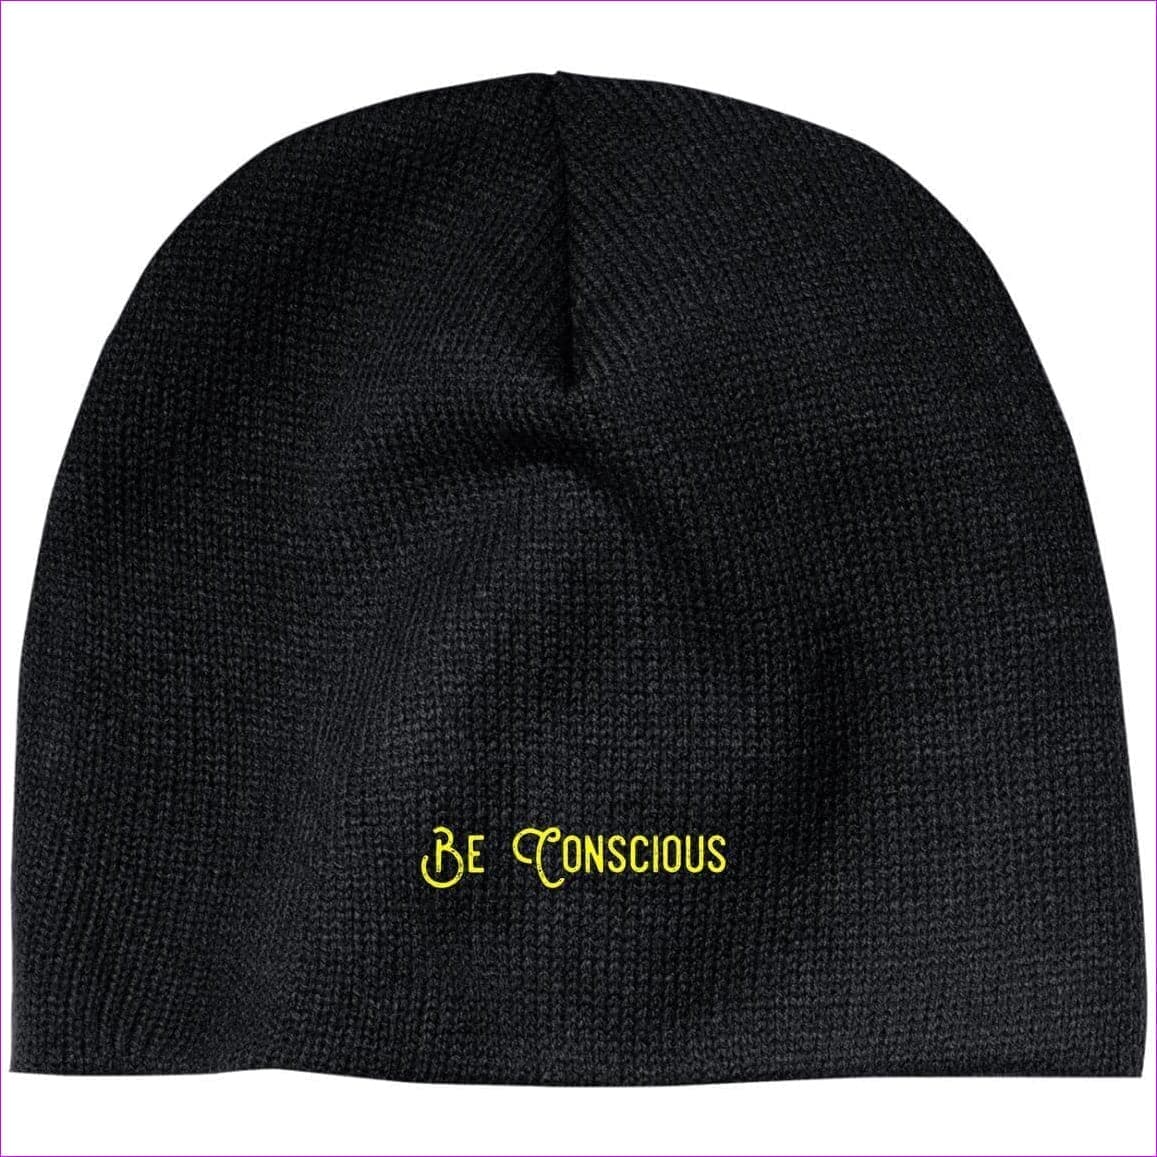 CP91 100% Acrylic Beanie Black One Size Be Conscious Embroidered Knit Cap, Cap, Beanie - Beanie at TFC&H Co.